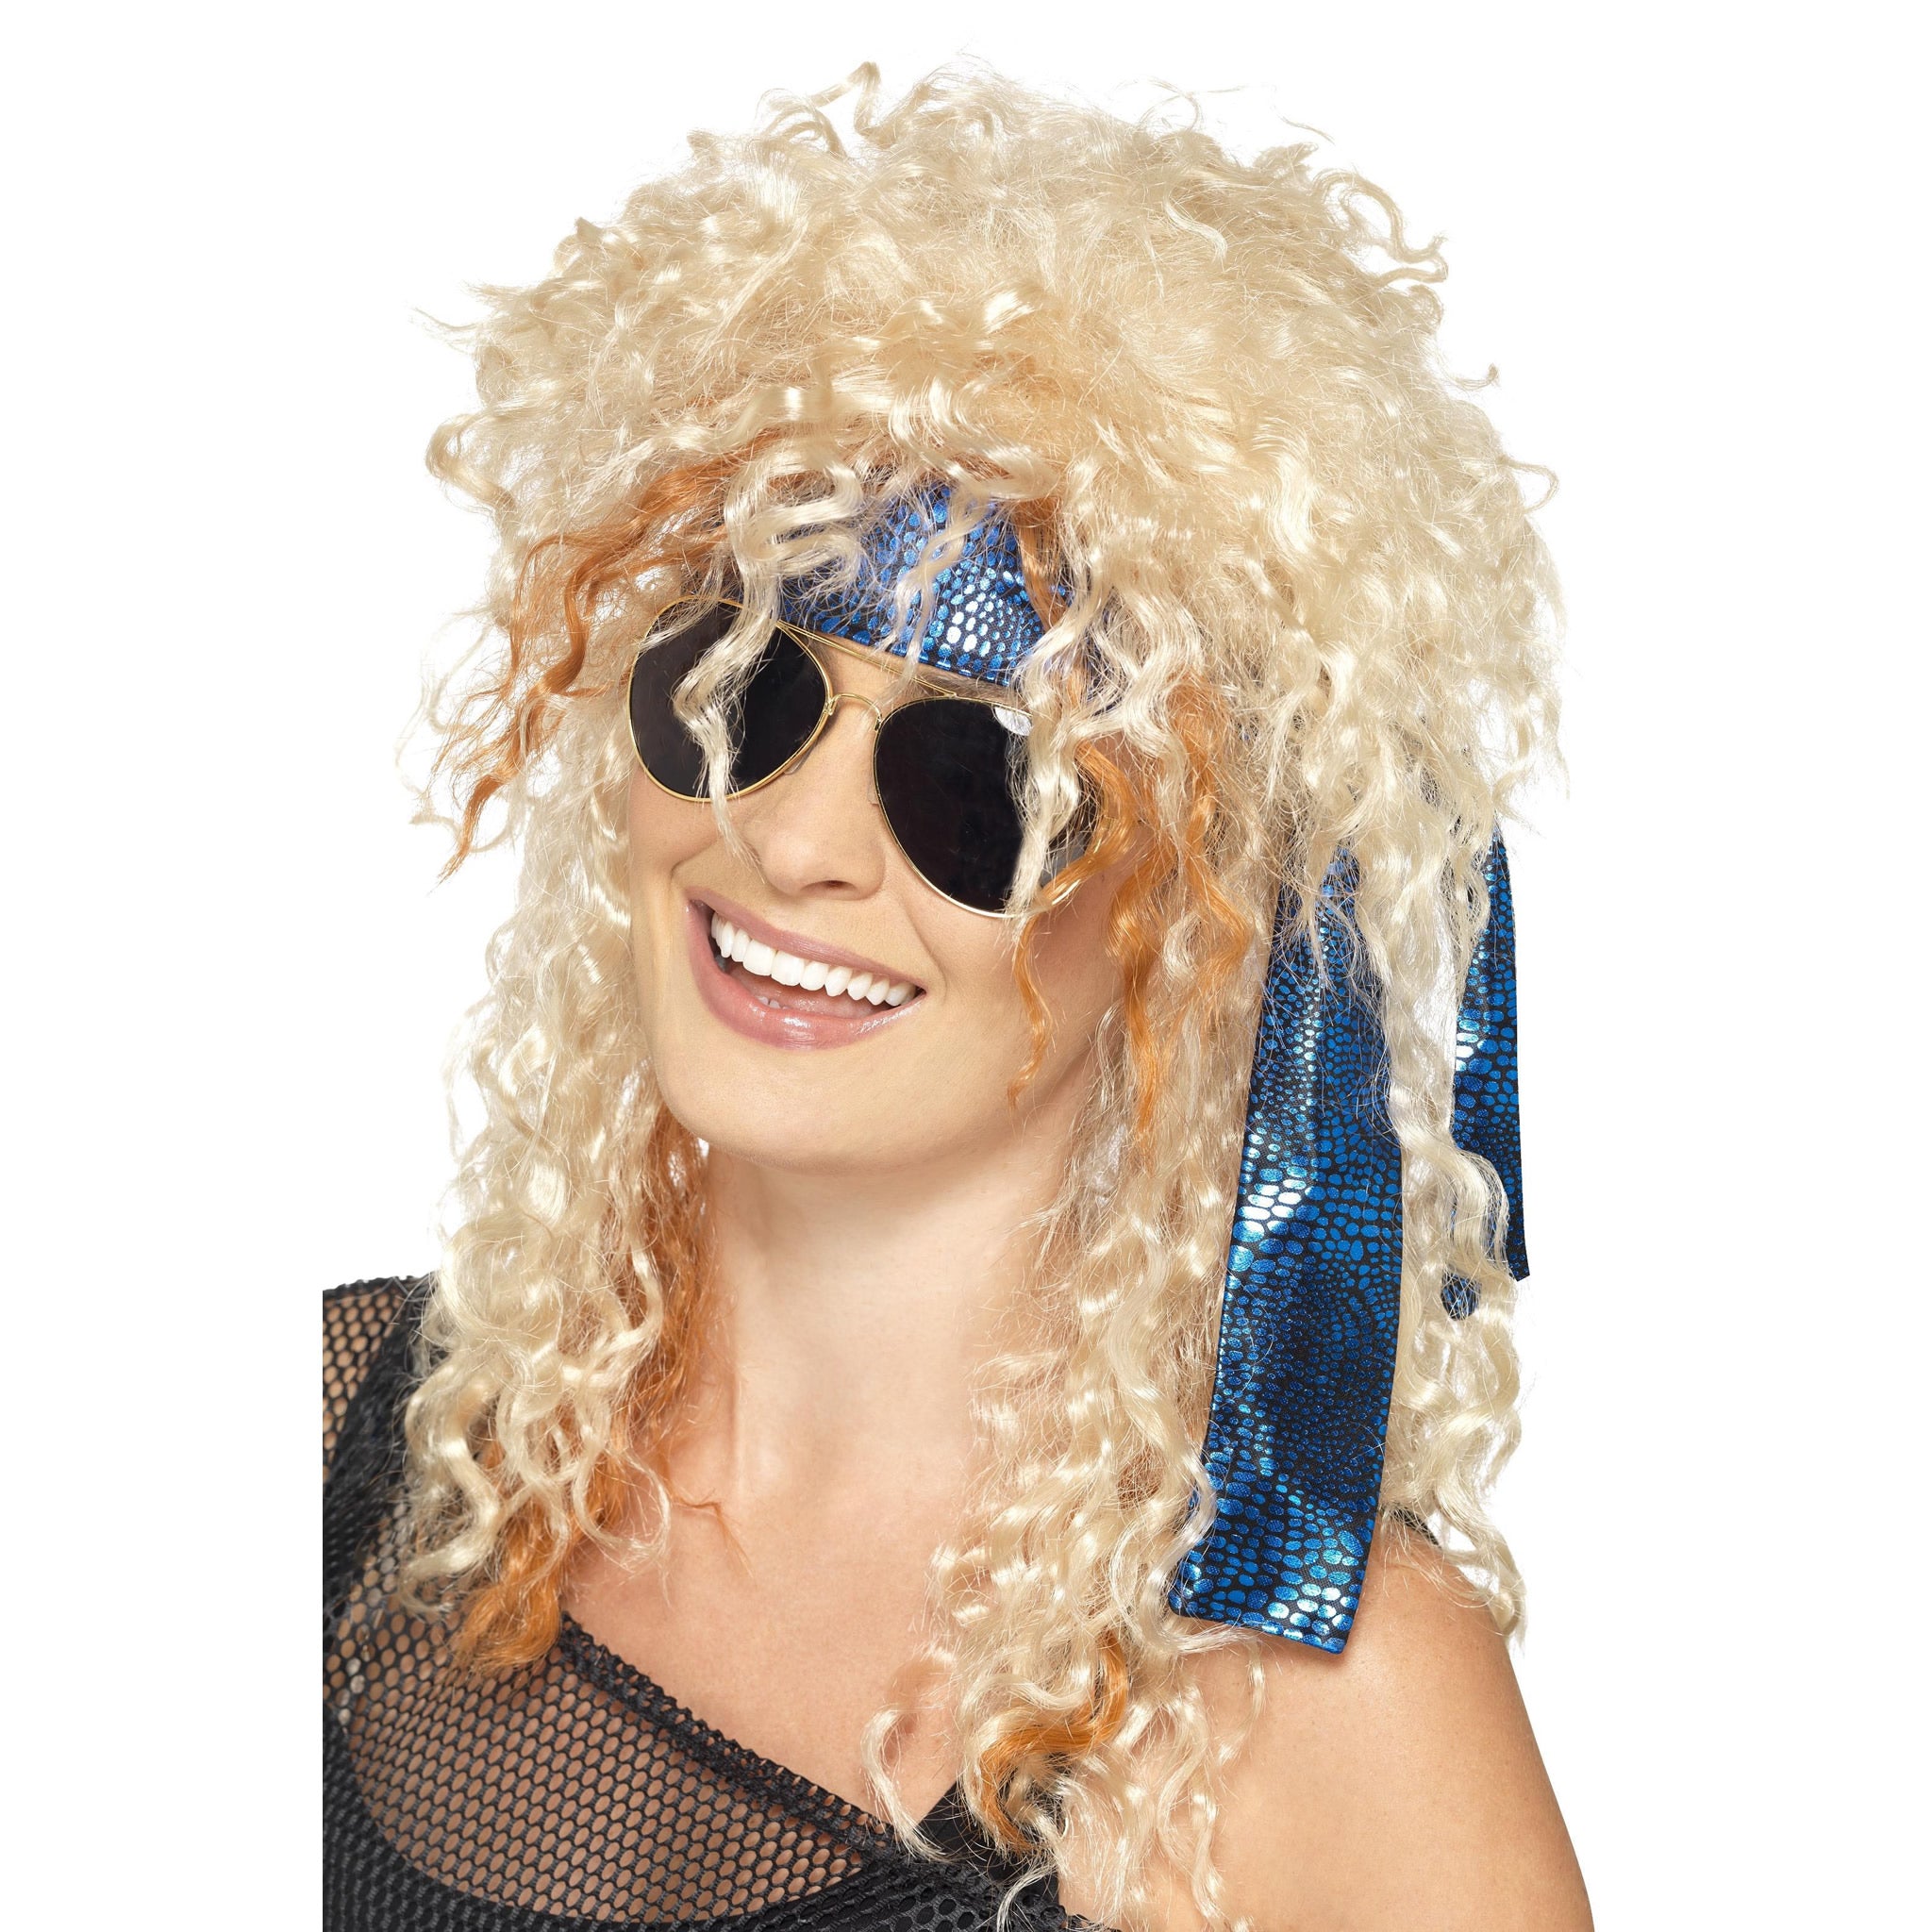 Heavy metal style long blonde wig worn by female